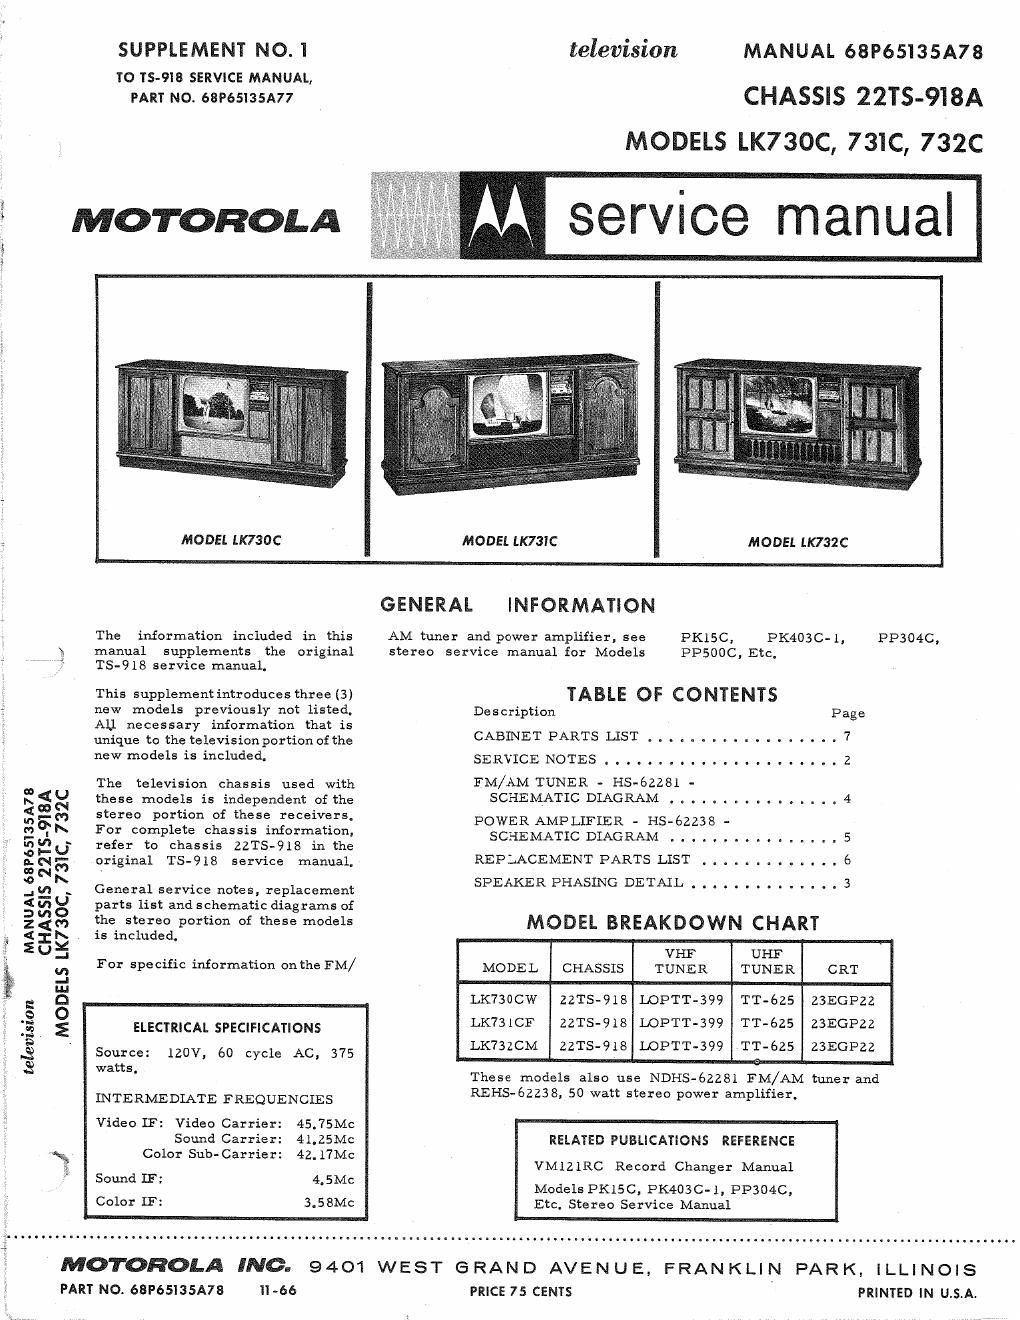 motorola lk 731 c service manual